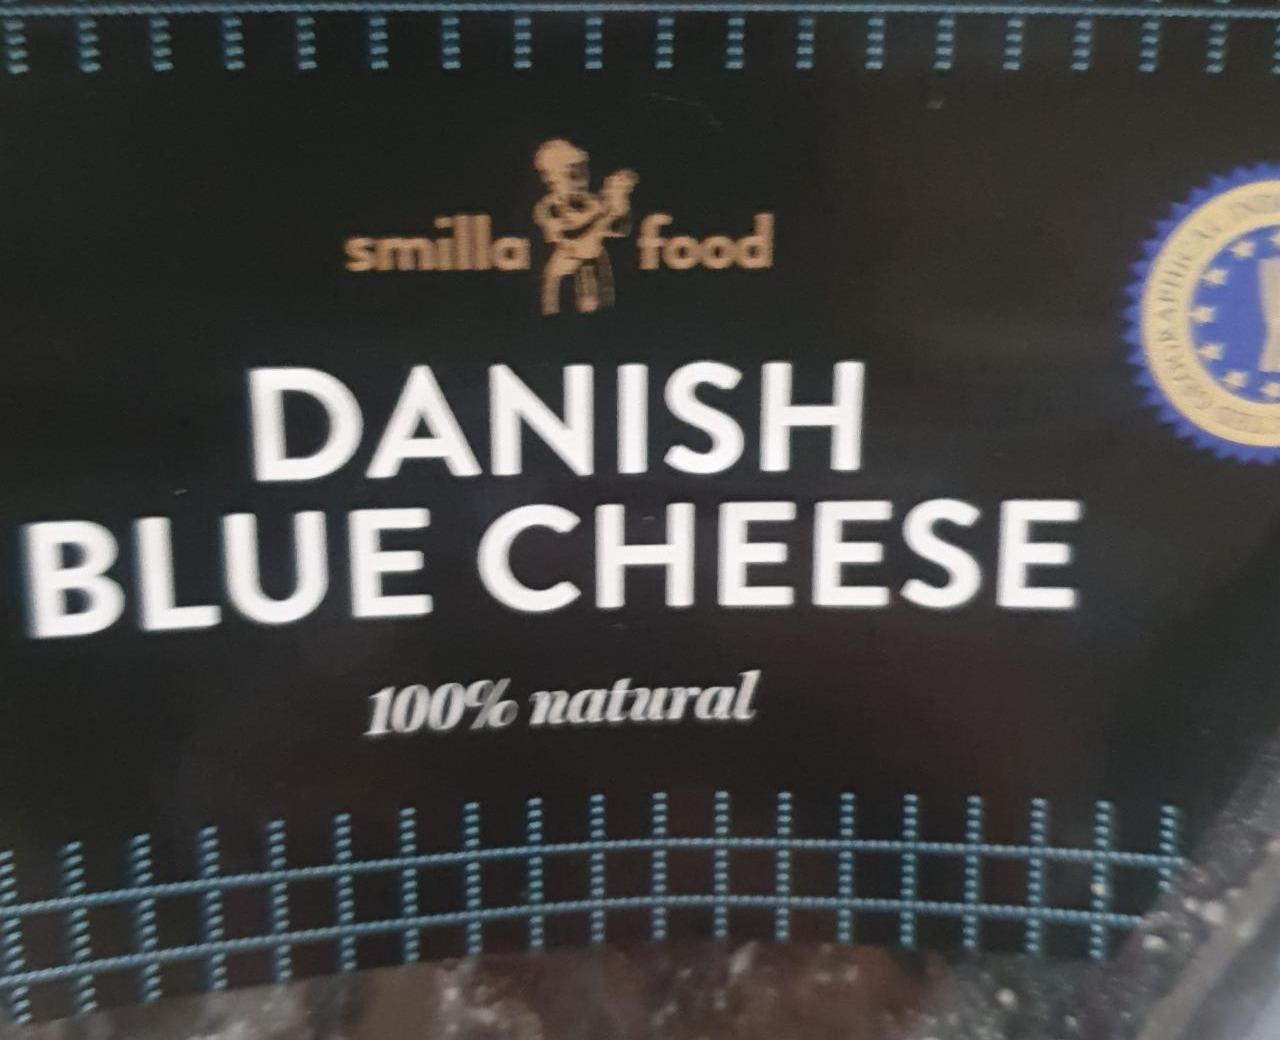 Фото - Сир Danish blue cheese 50% Smilla food